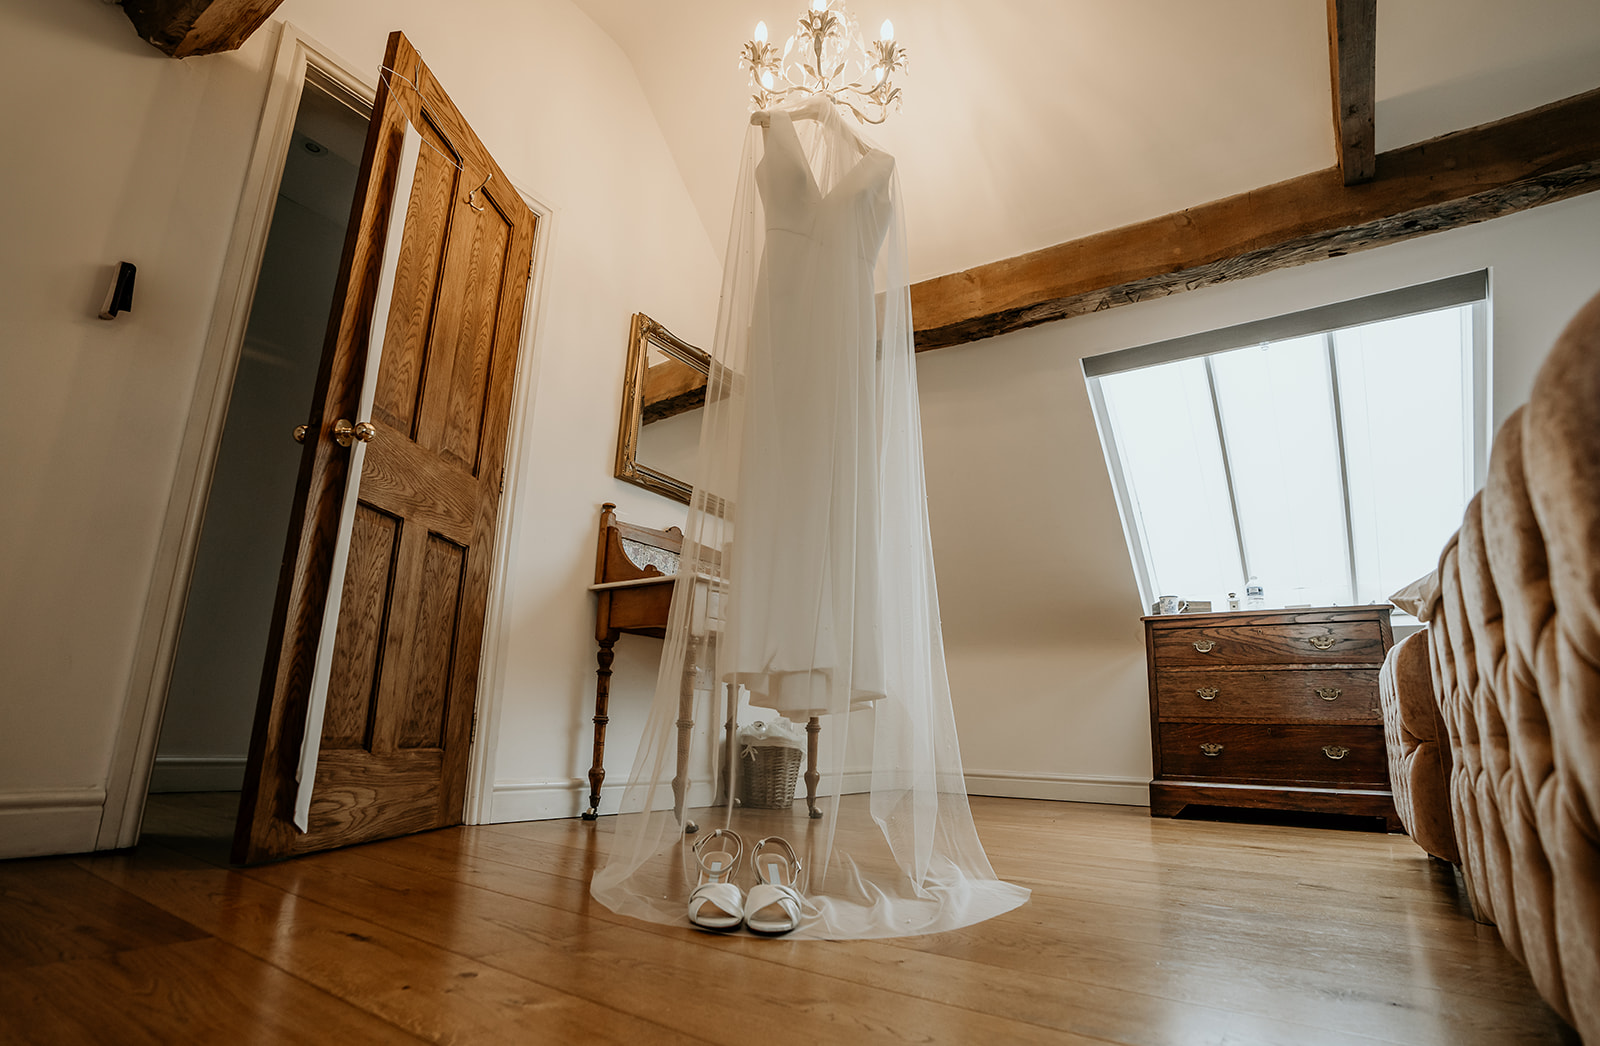 brides wedding dress hung in barn